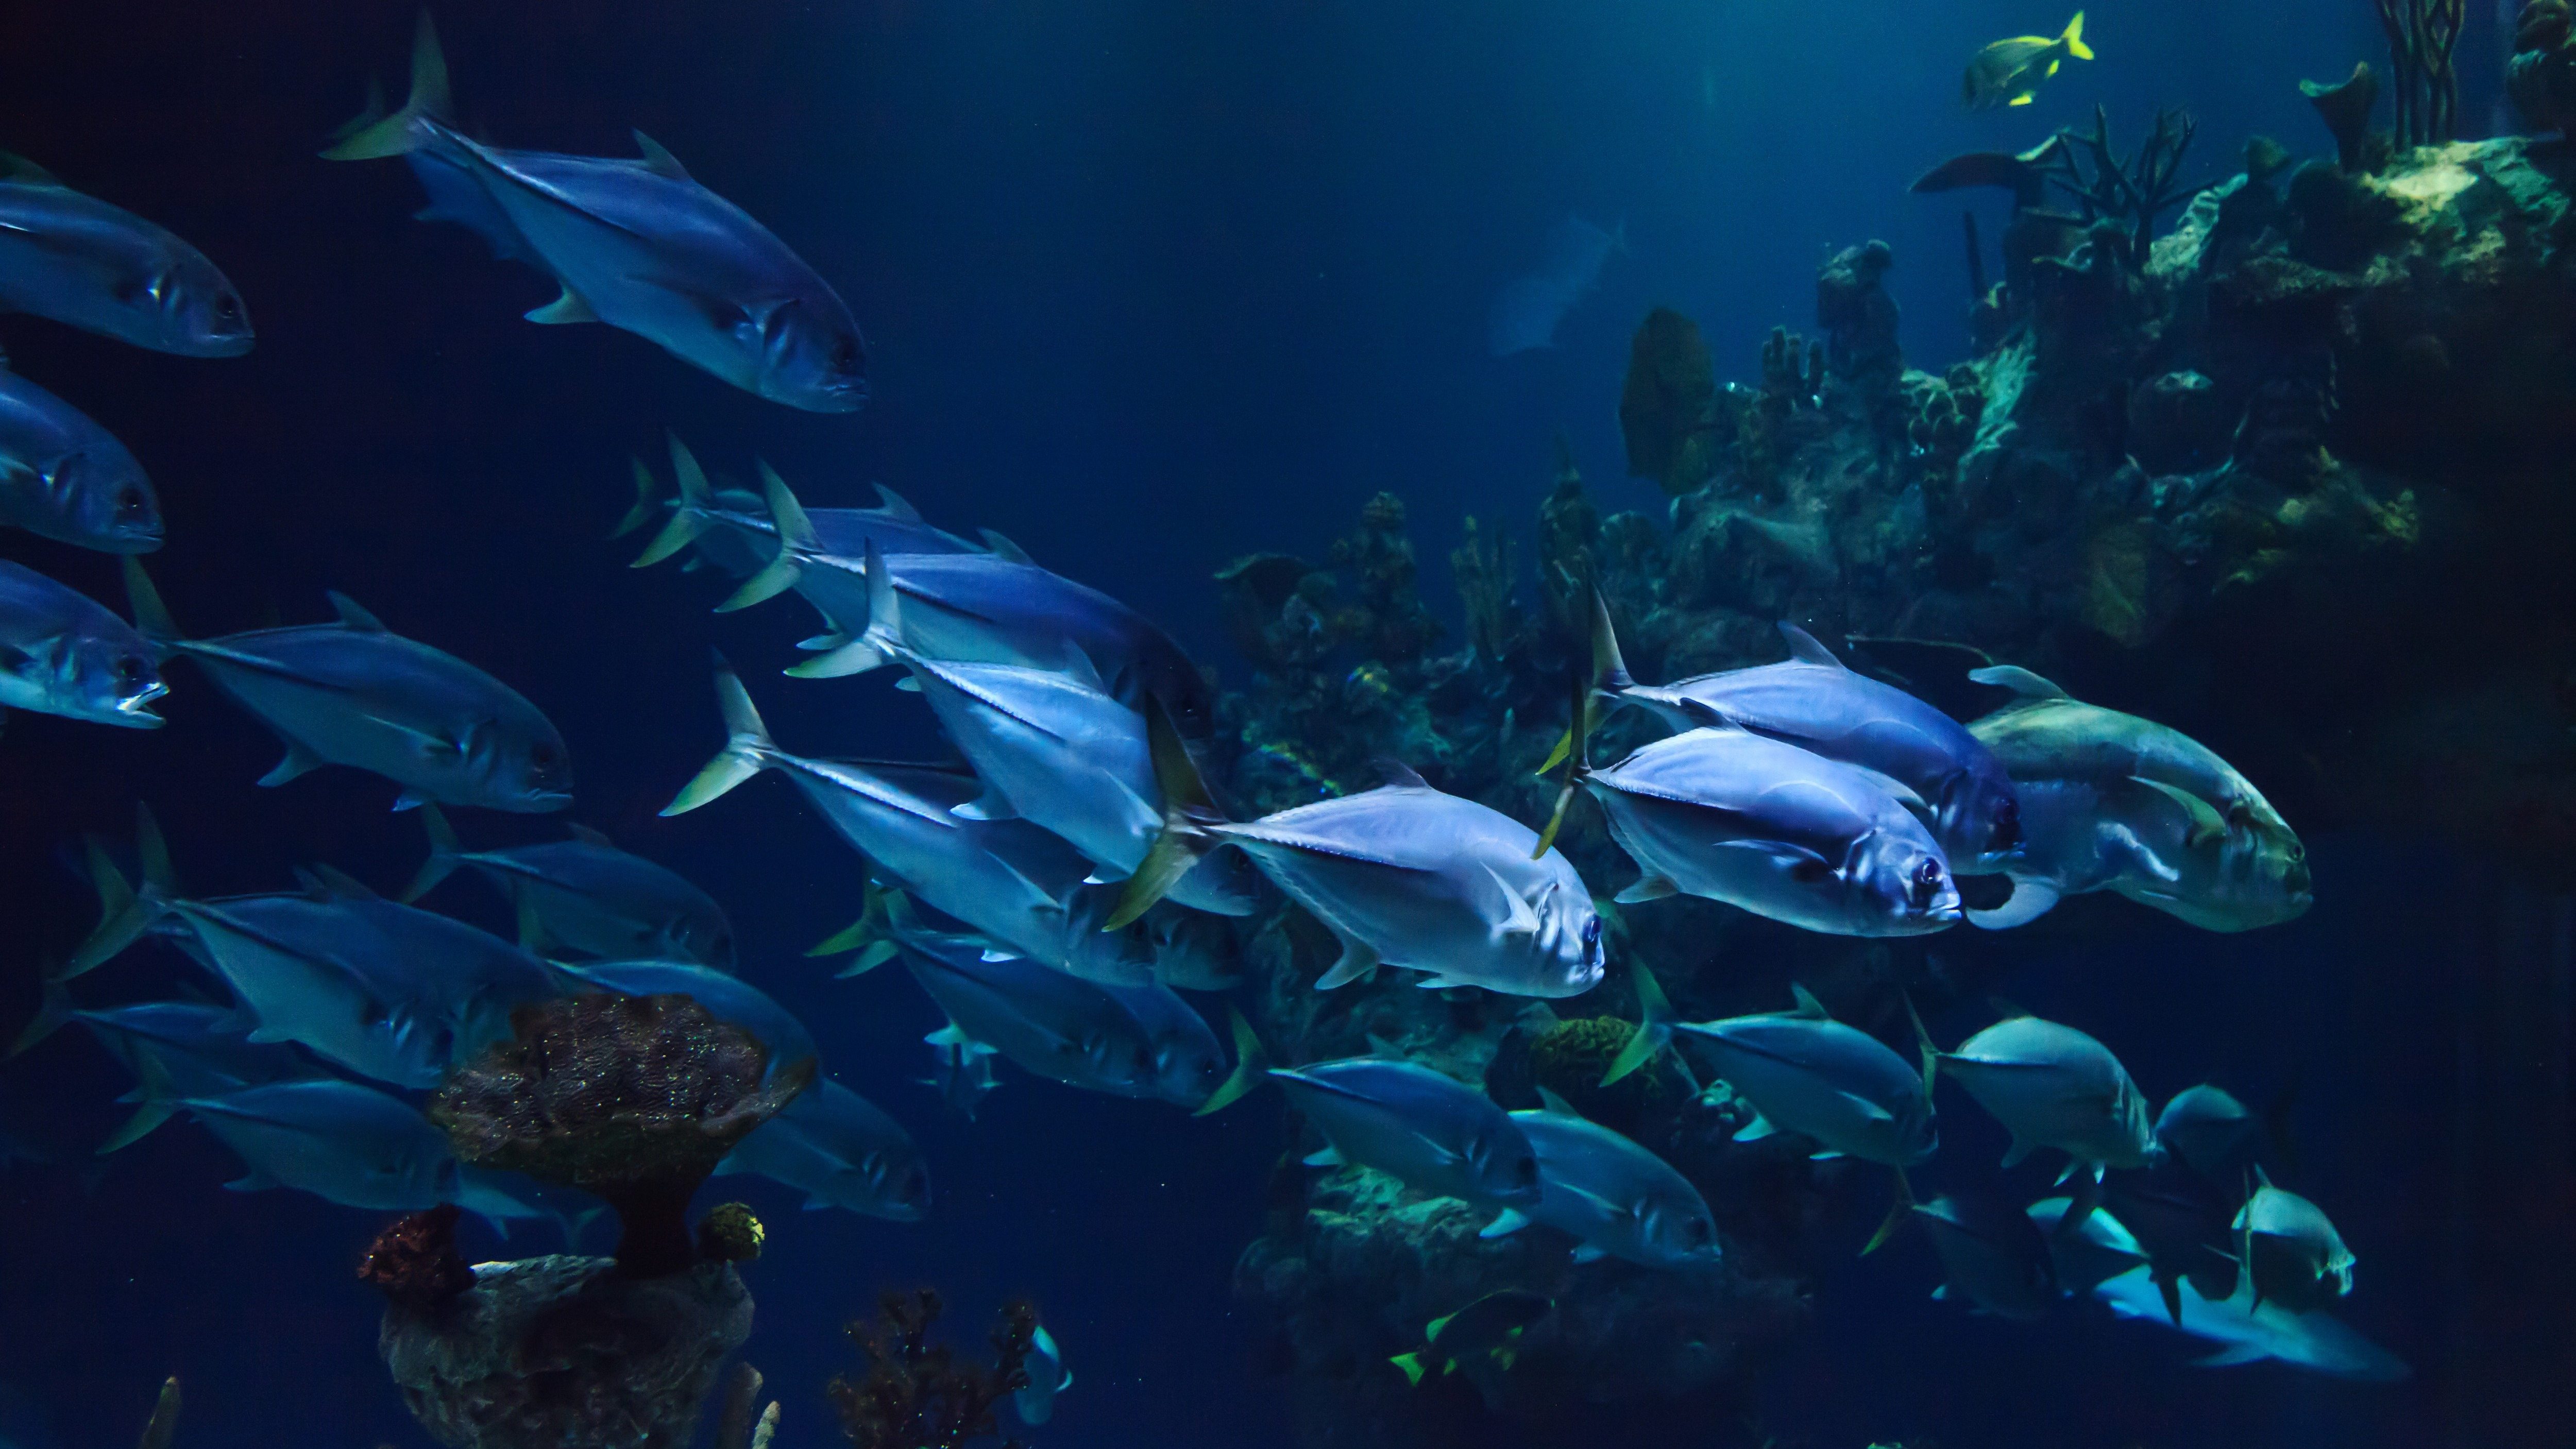 Poissons dans un aquarium. Pixabay License / https://pixabay.com/fr/photos/animal-aquarium-aquatique-corail-21668/